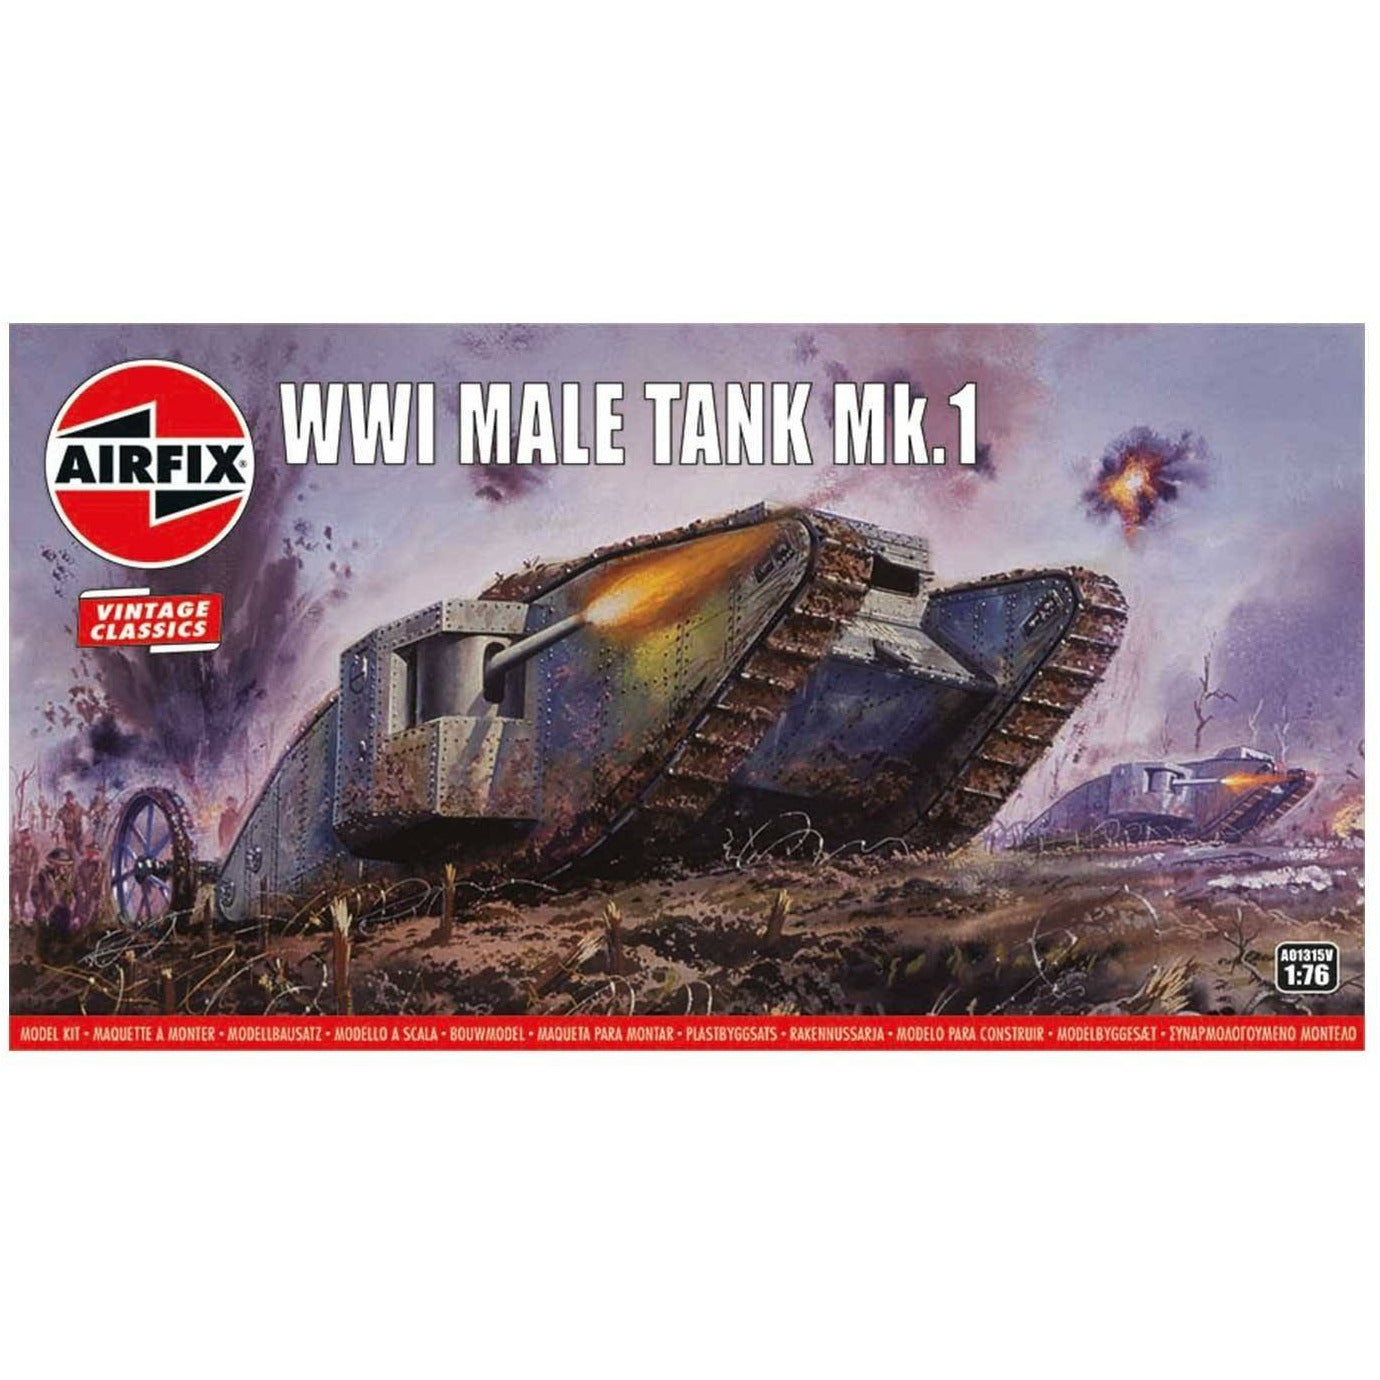 WWI Male Tank 1/76 #01315 by Airfix